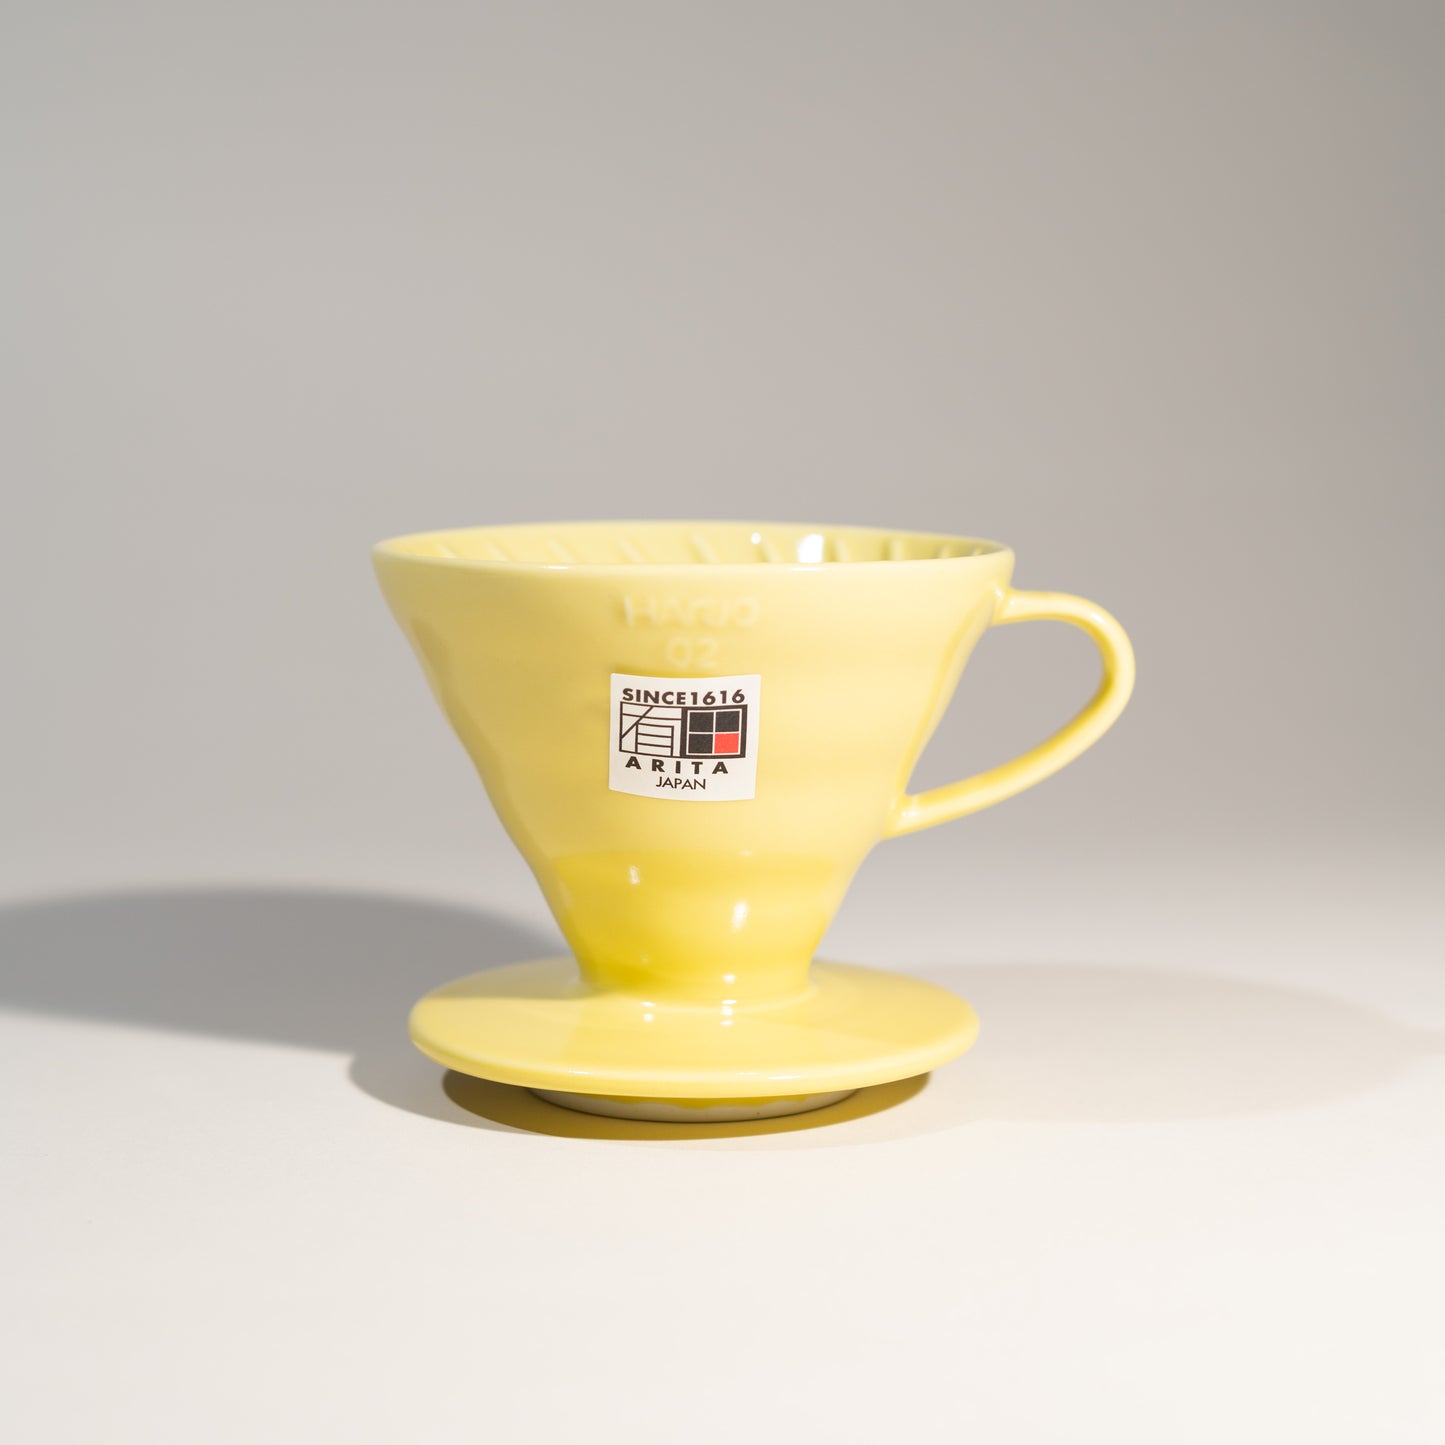 Hario Ceramic v60 02 Yellow Coffee Dripper